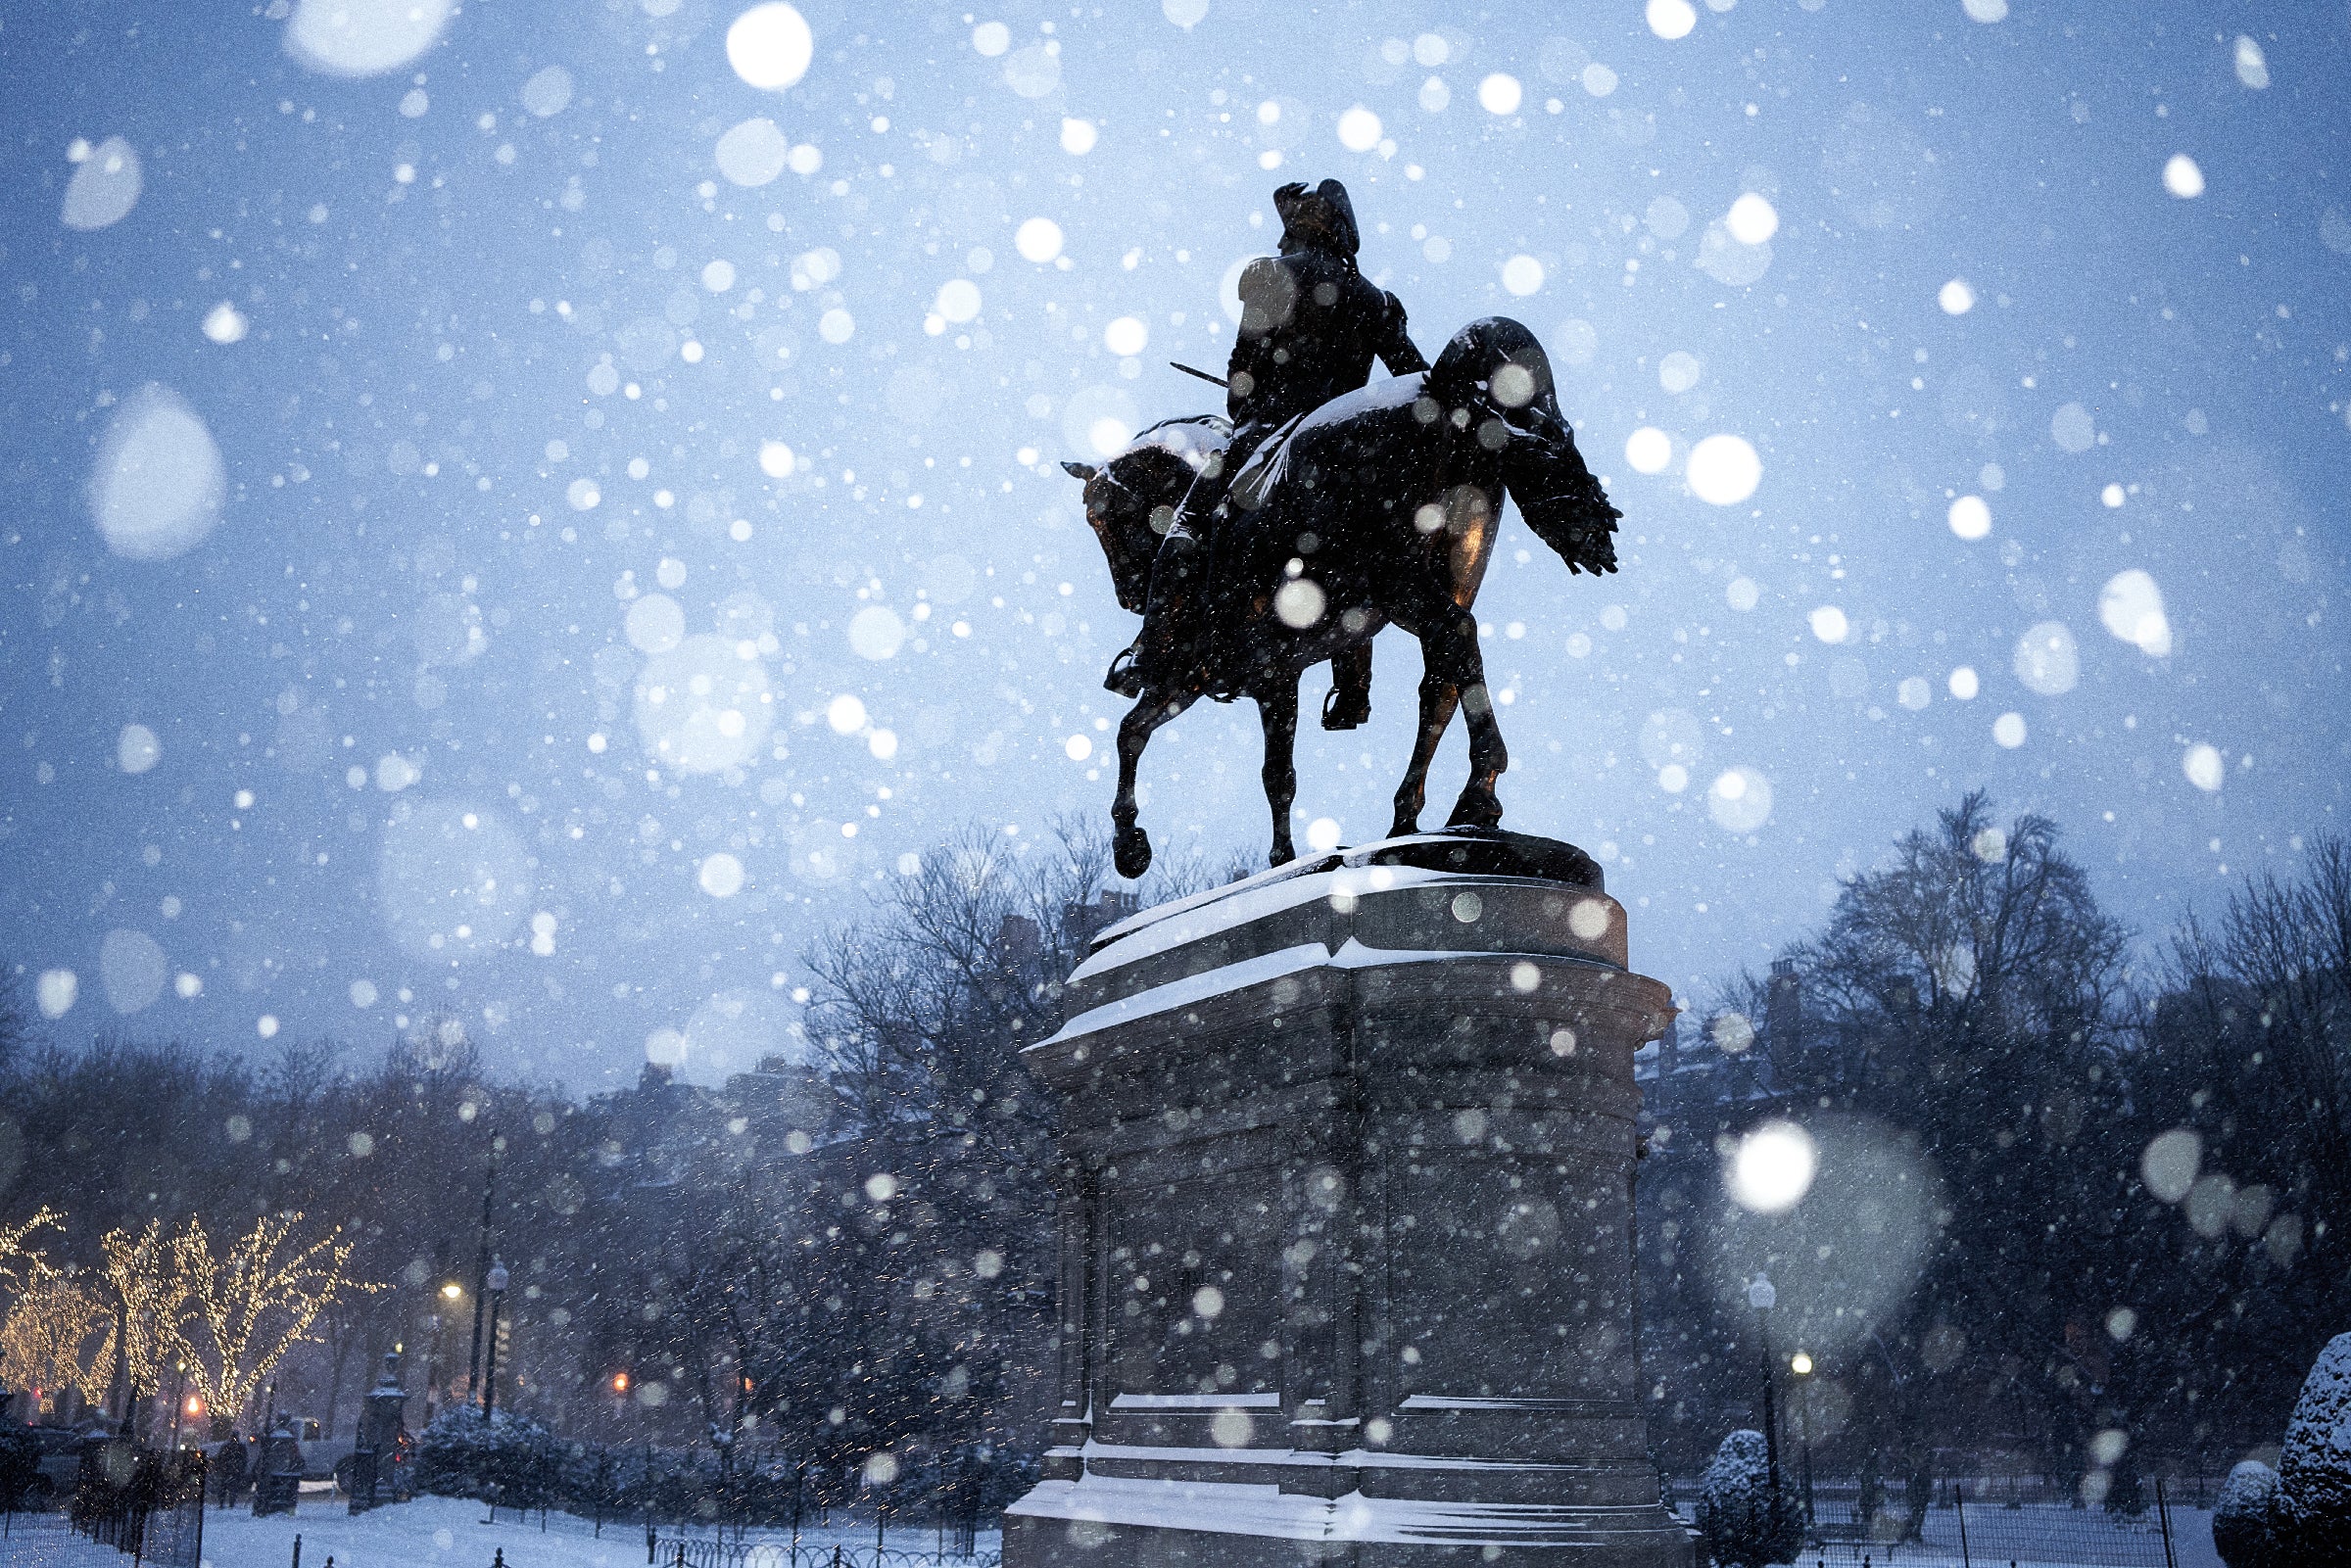 Boston ties its singleday snowfall record with Blizzard of '22